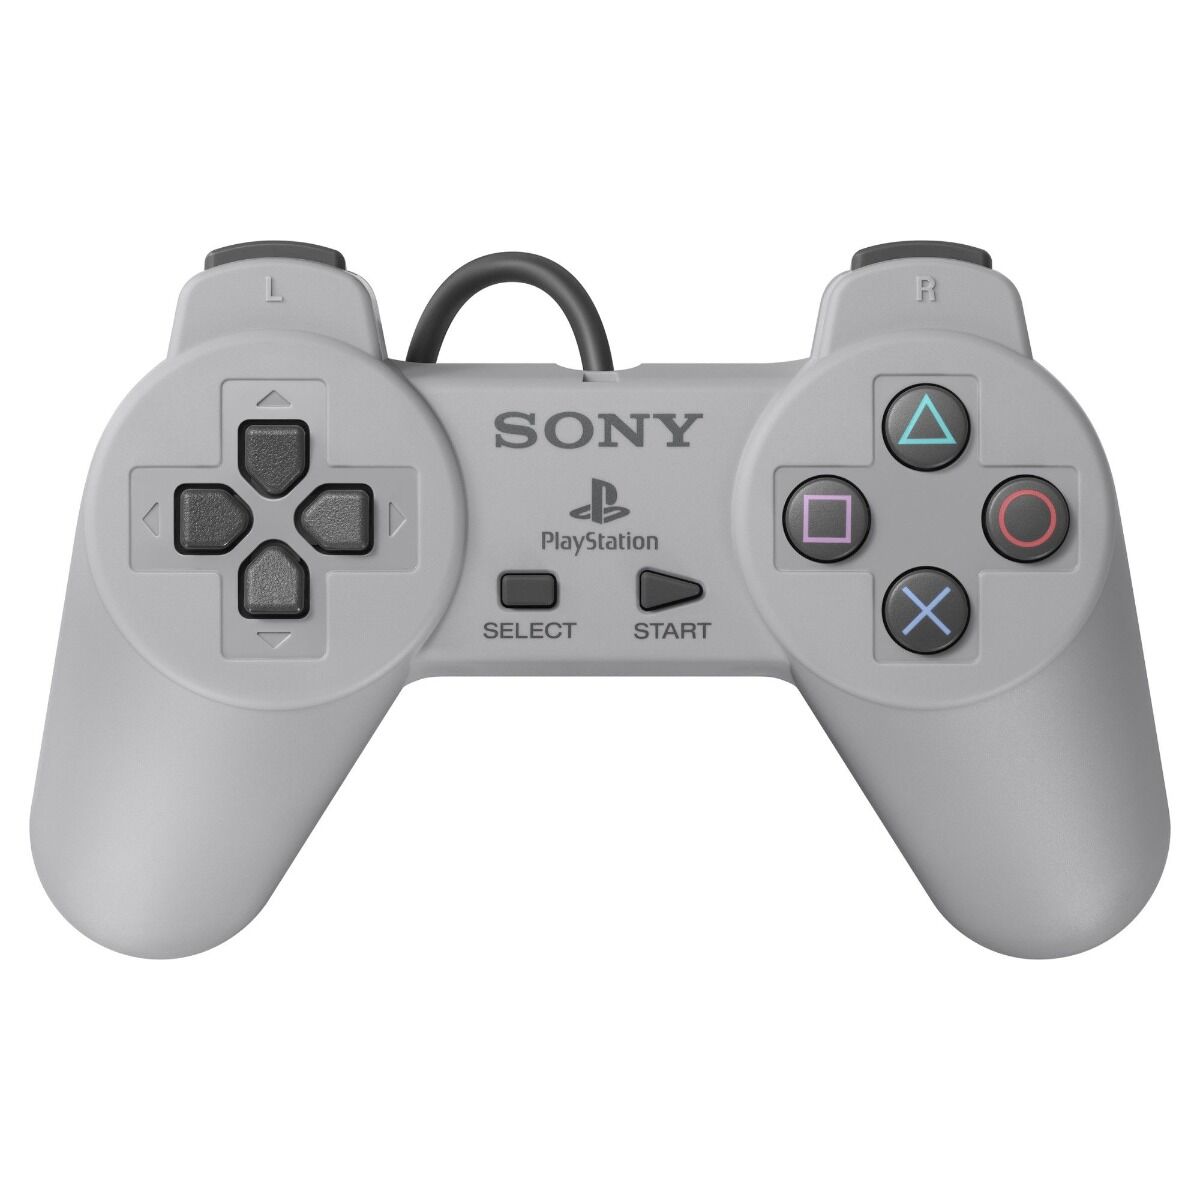 Consola Sony Playstation Classic